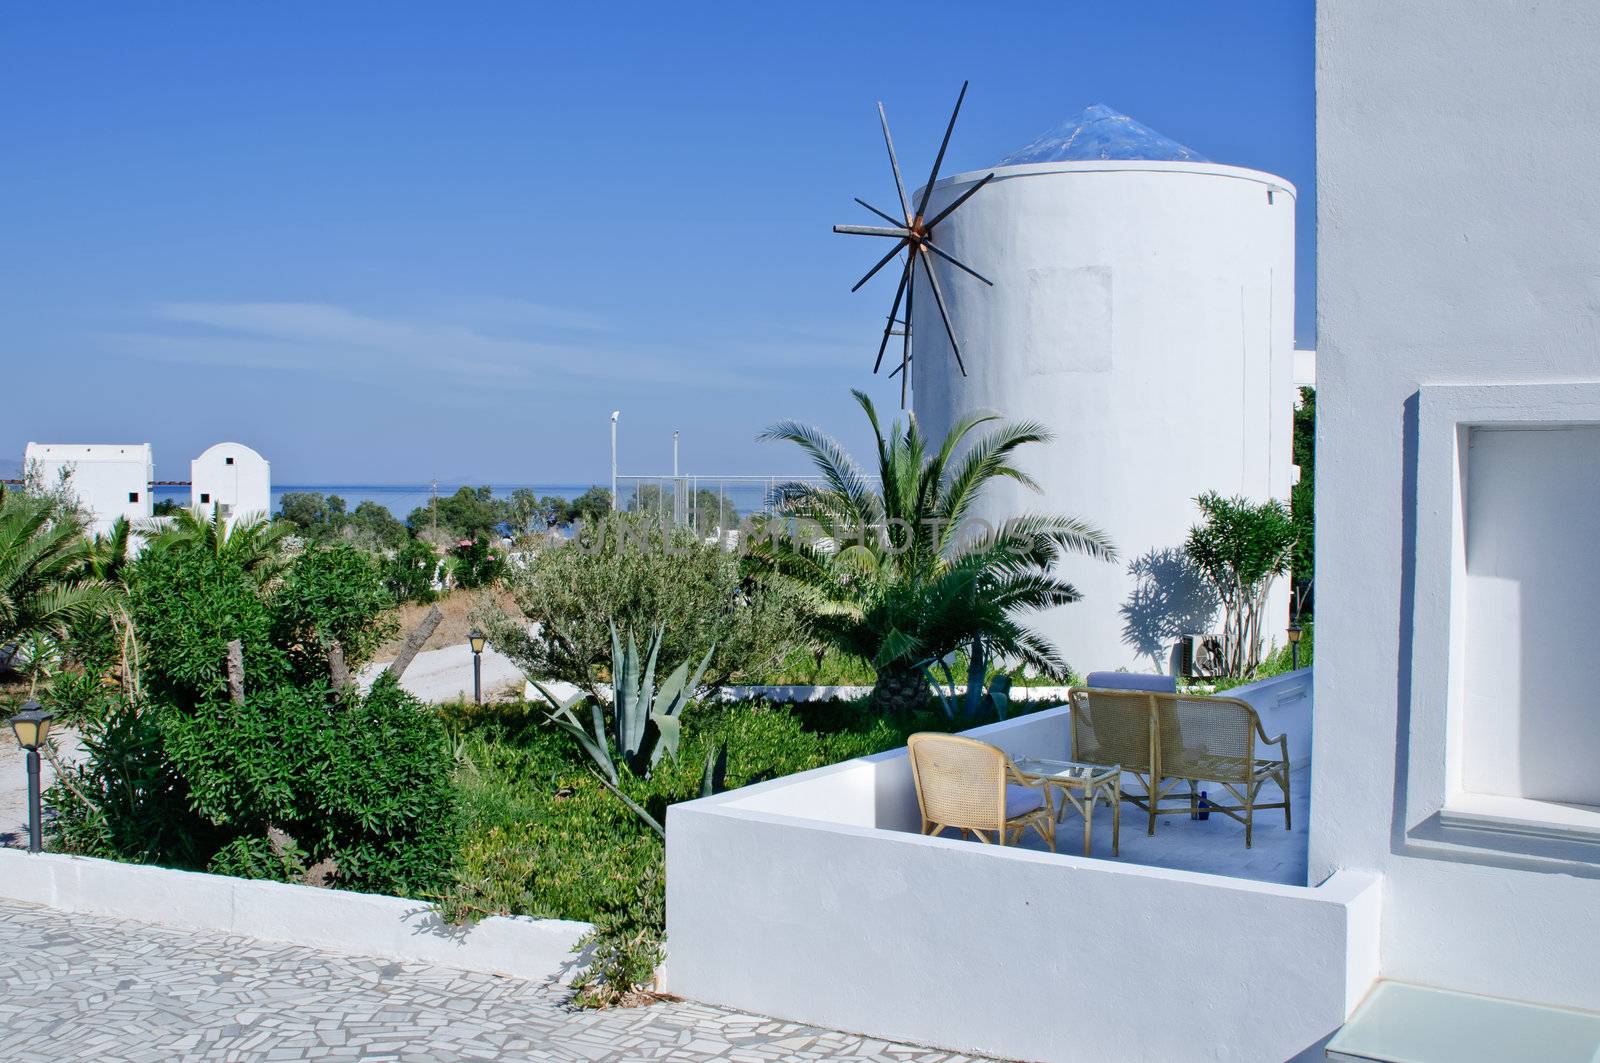 Hotel Resort in Naxos, an Isle of Greece